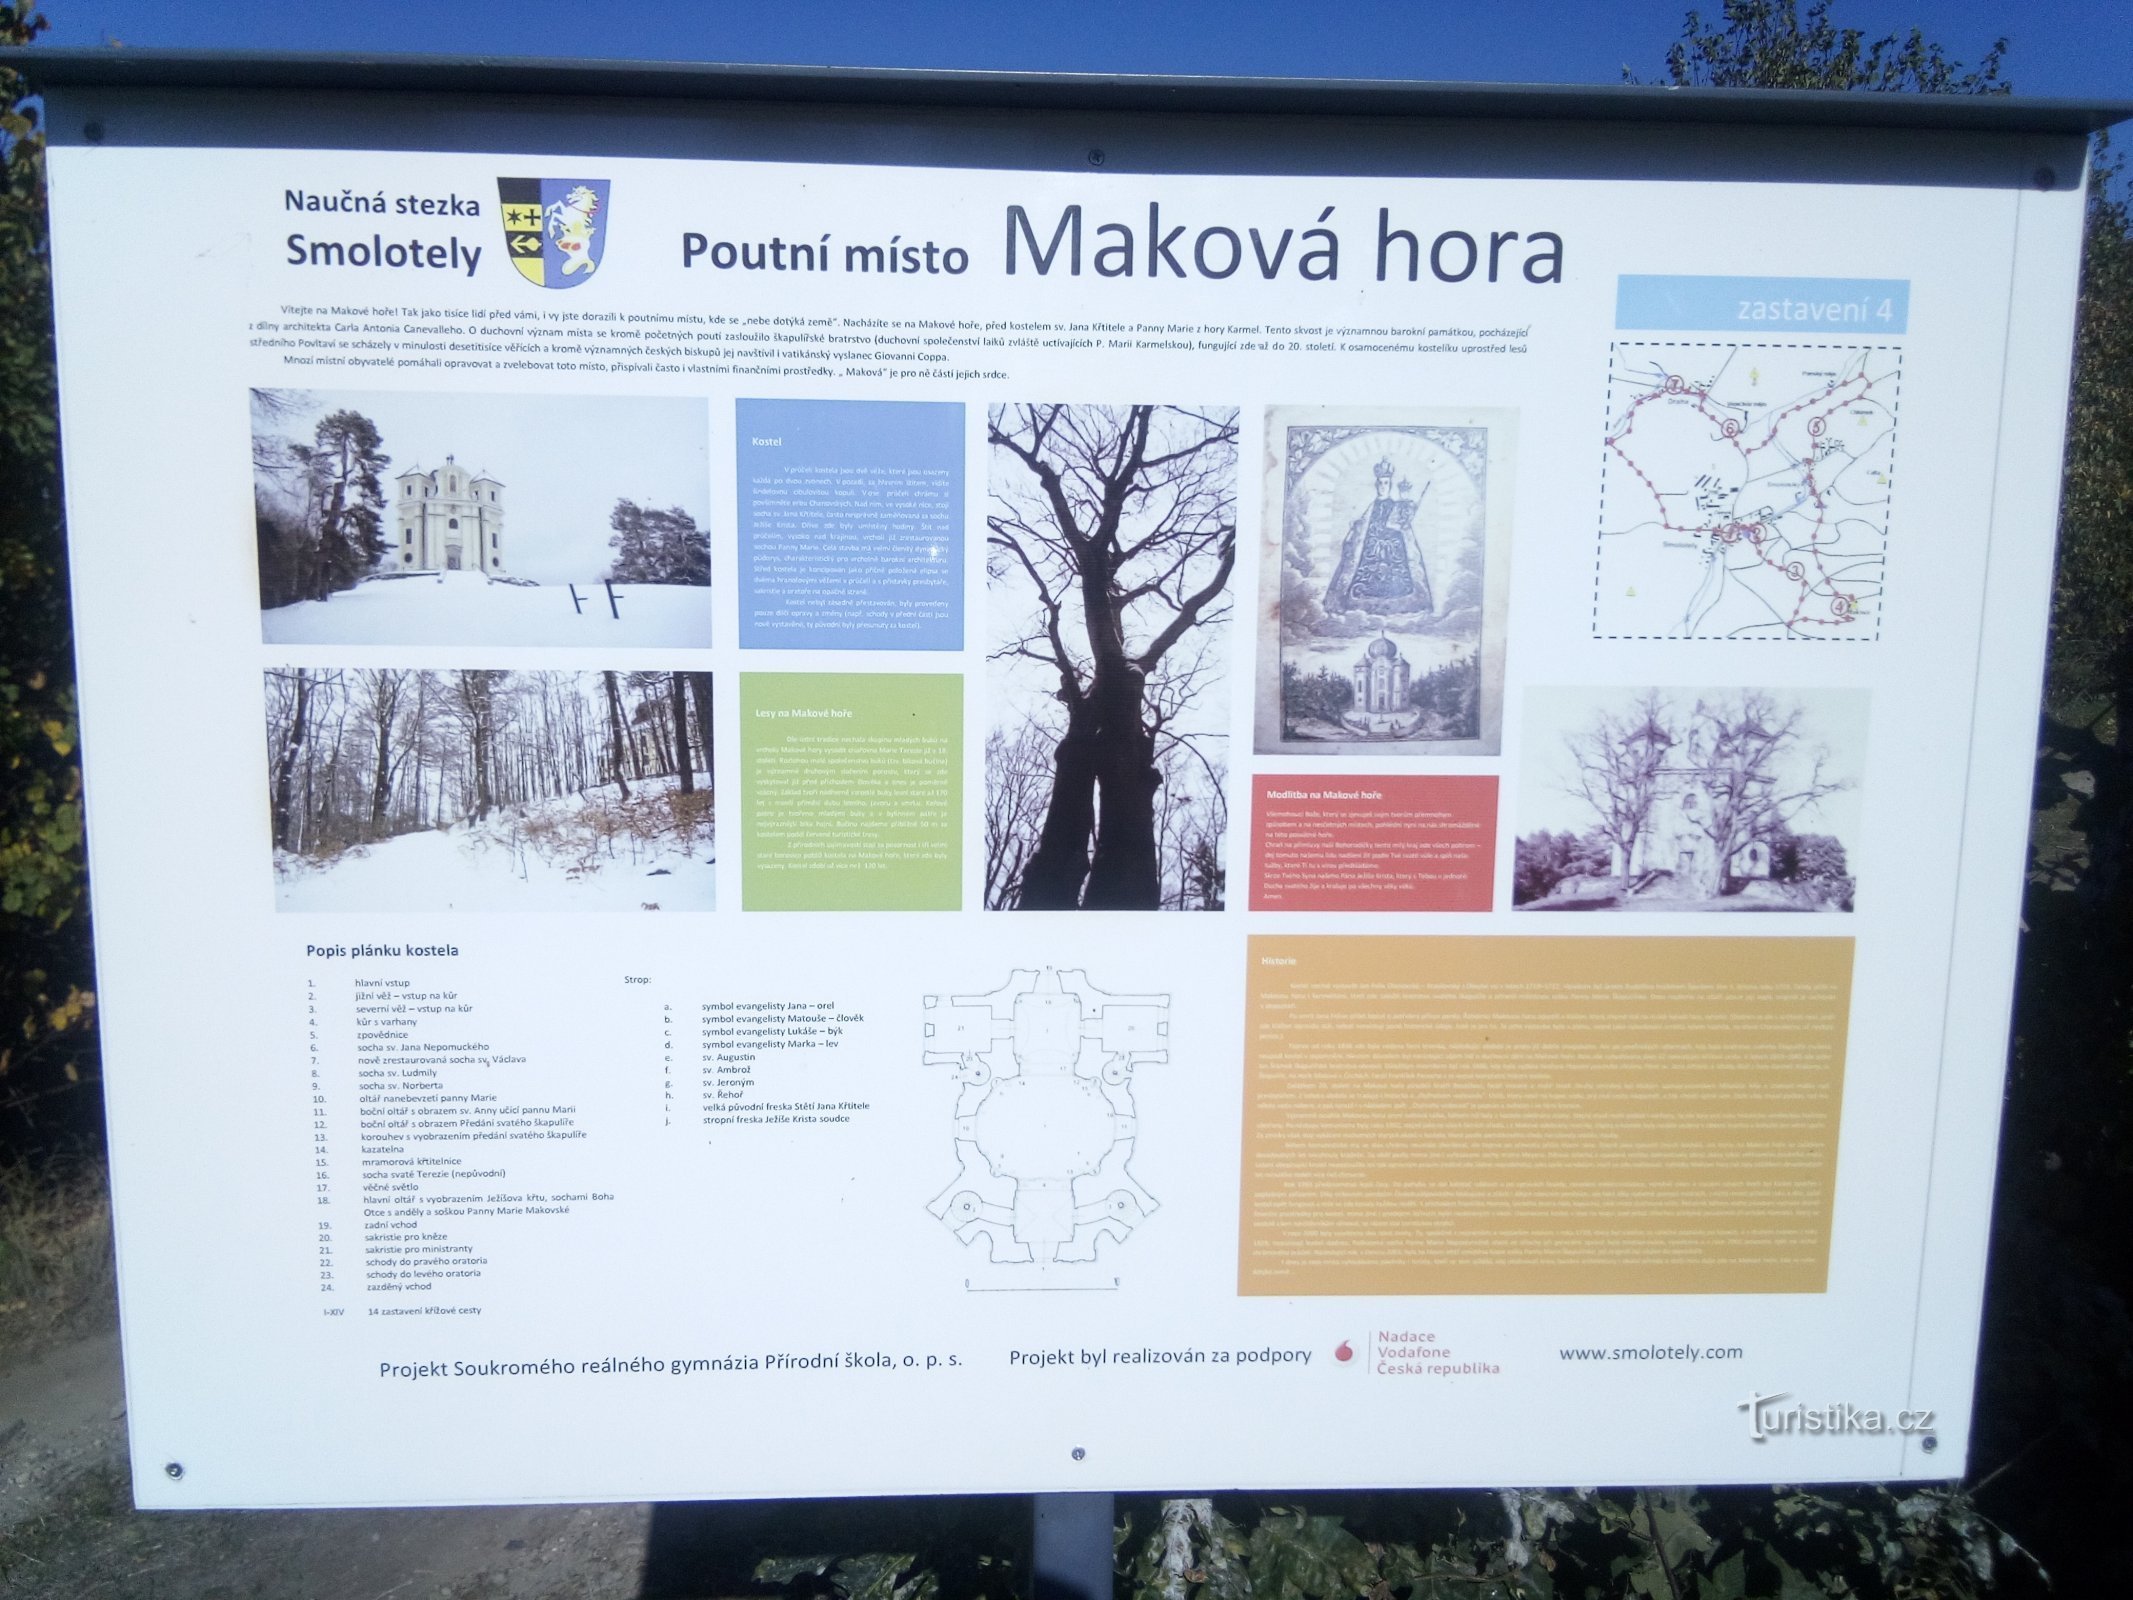 Around Smolotel via Makova hora and Milada lookout